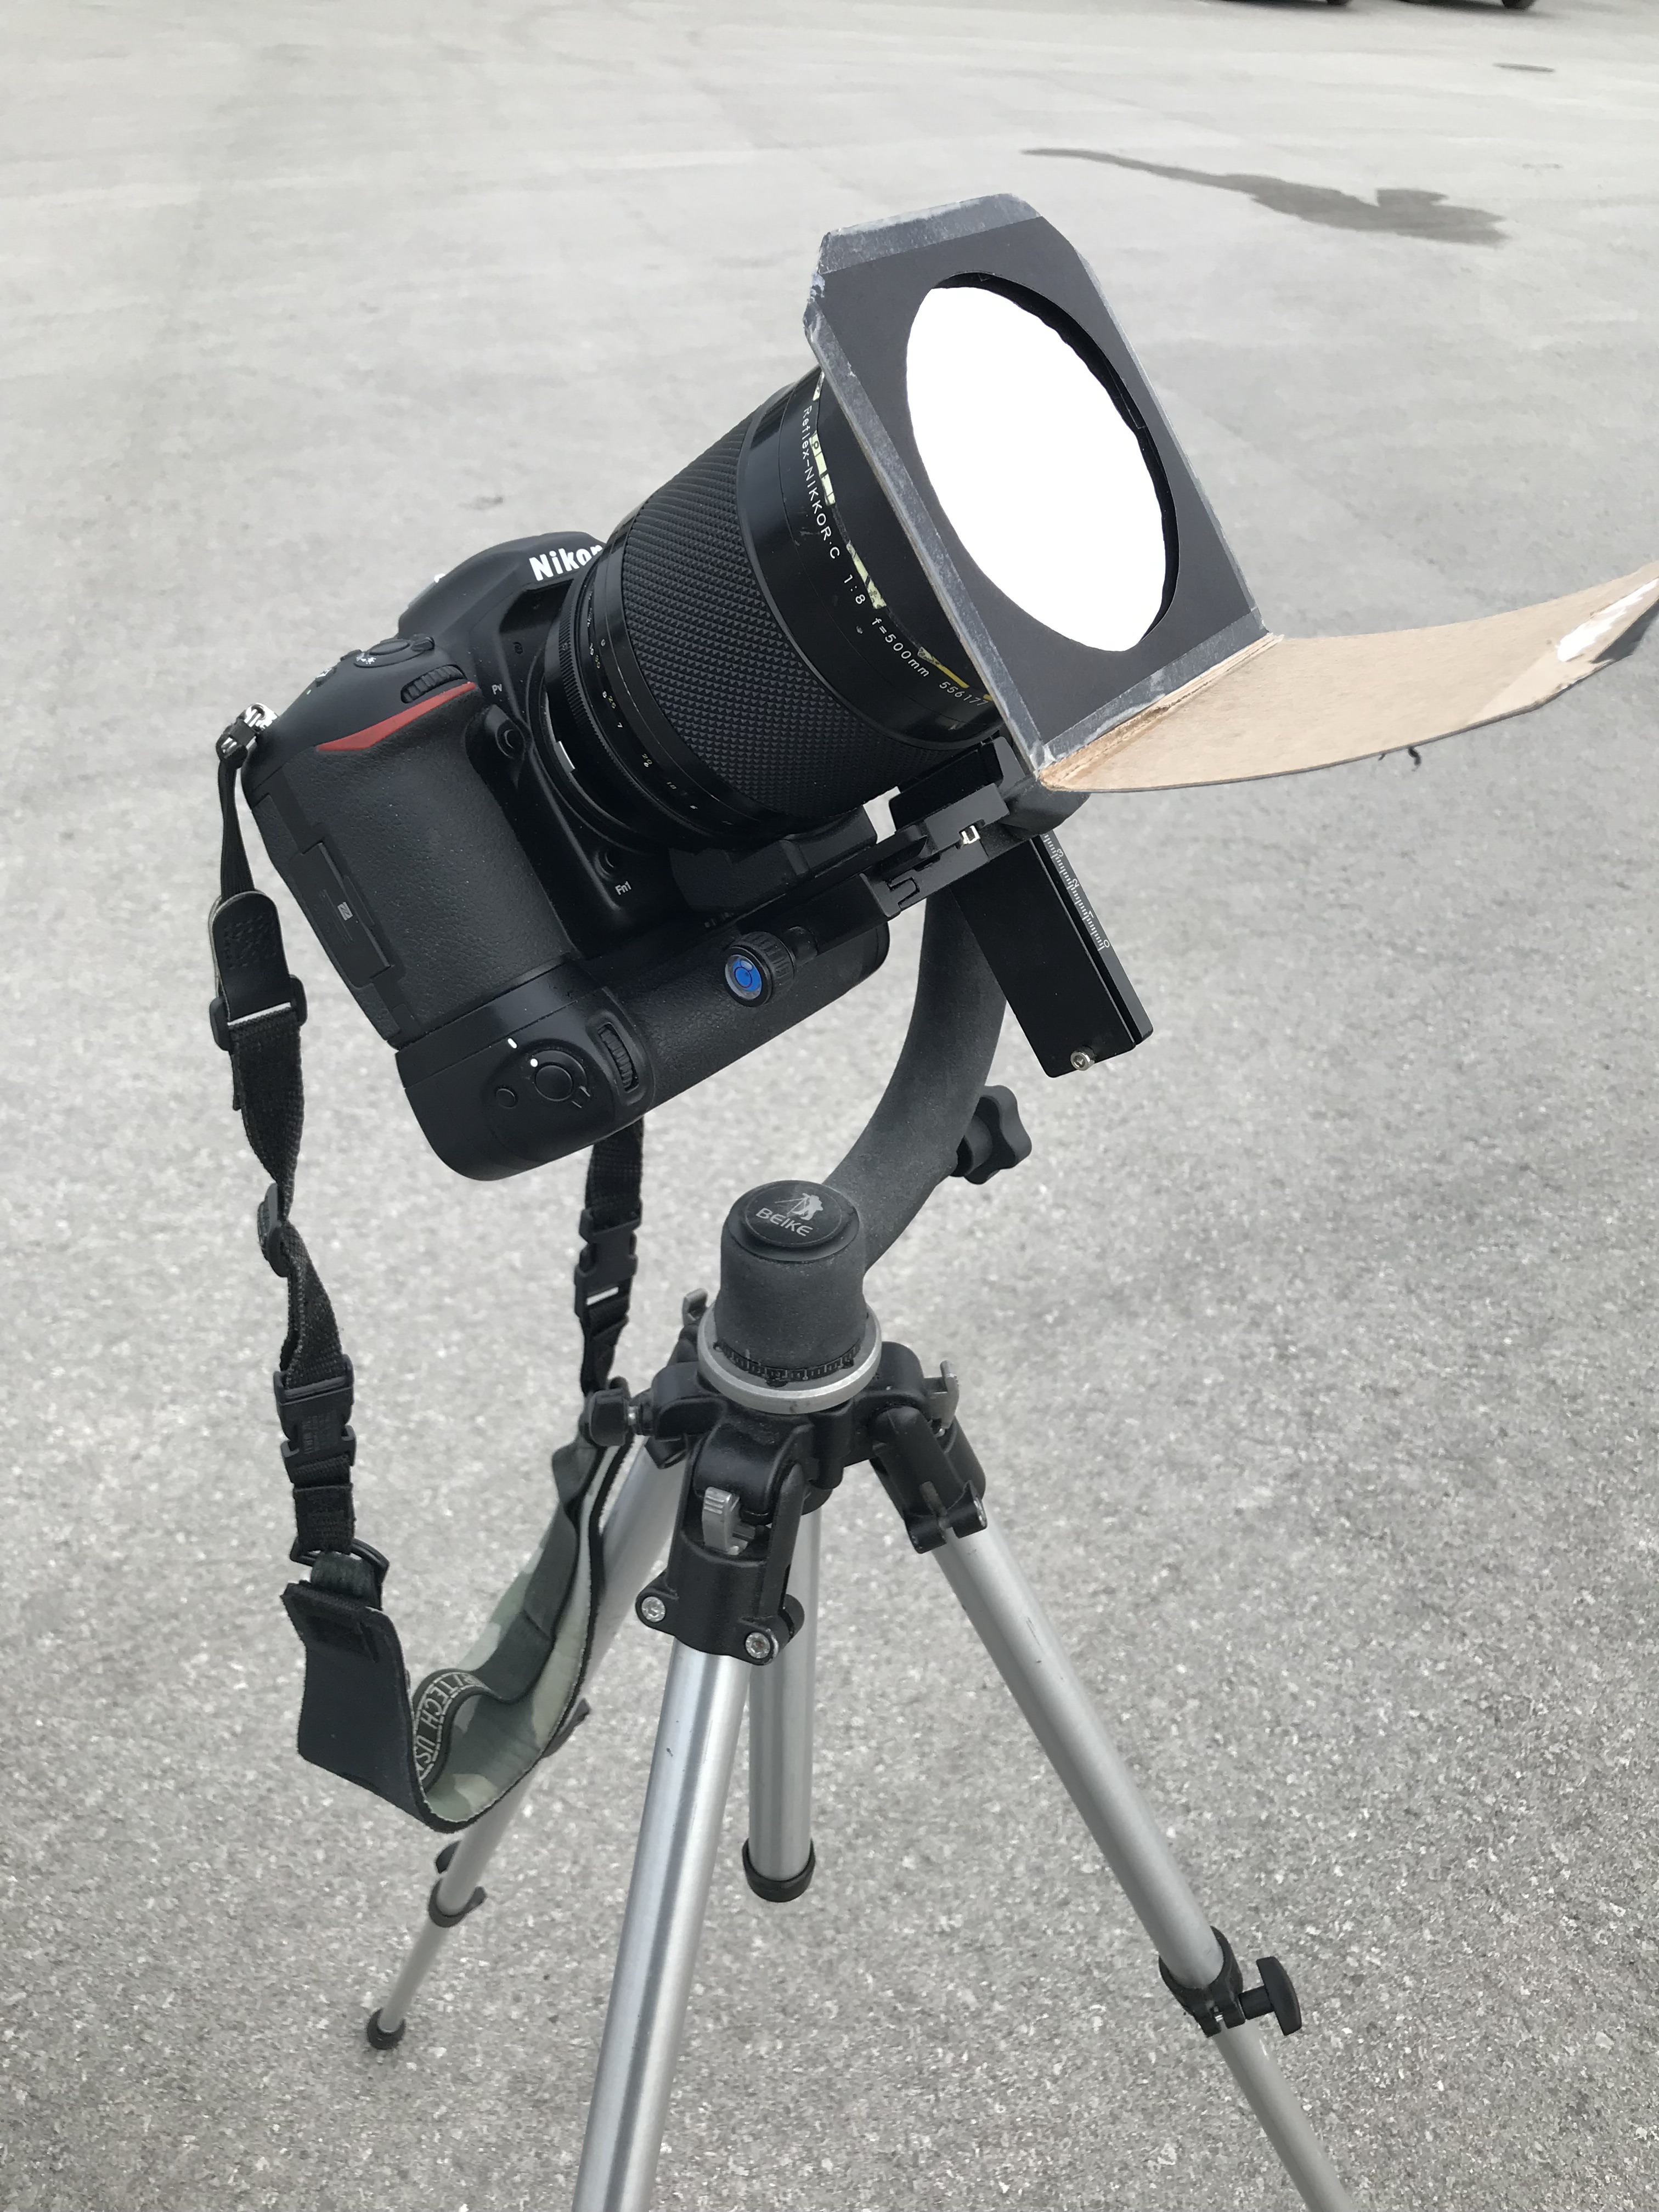 Nikon D500 with 500mm Nikkor f8 mirror lens and Baader Planetarium AstroSolar Safety Film